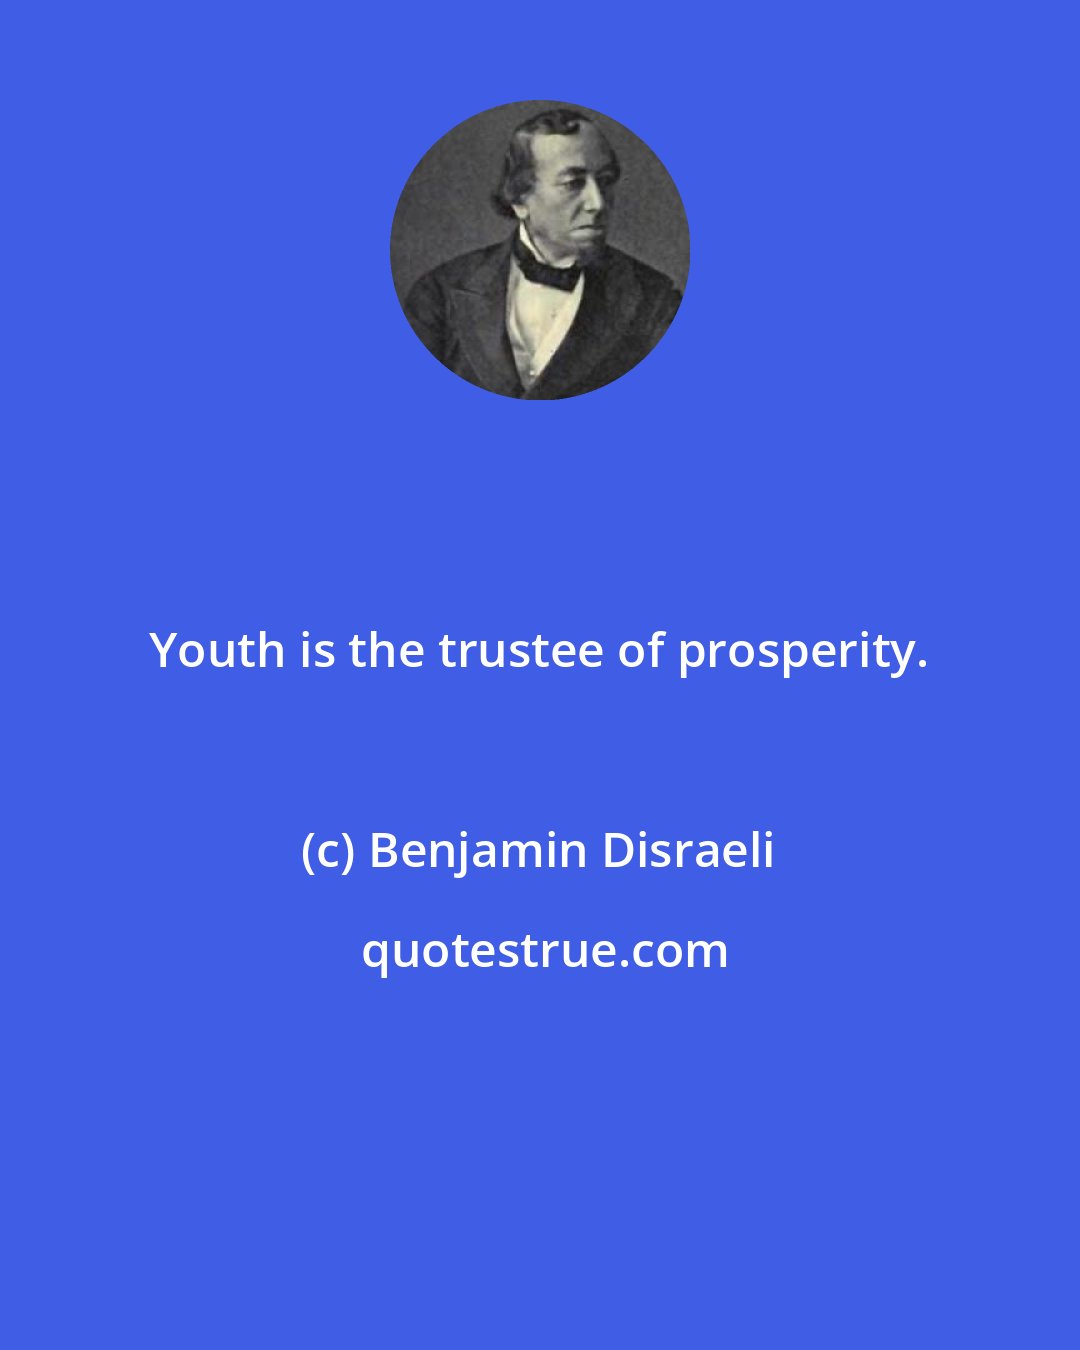 Benjamin Disraeli: Youth is the trustee of prosperity.